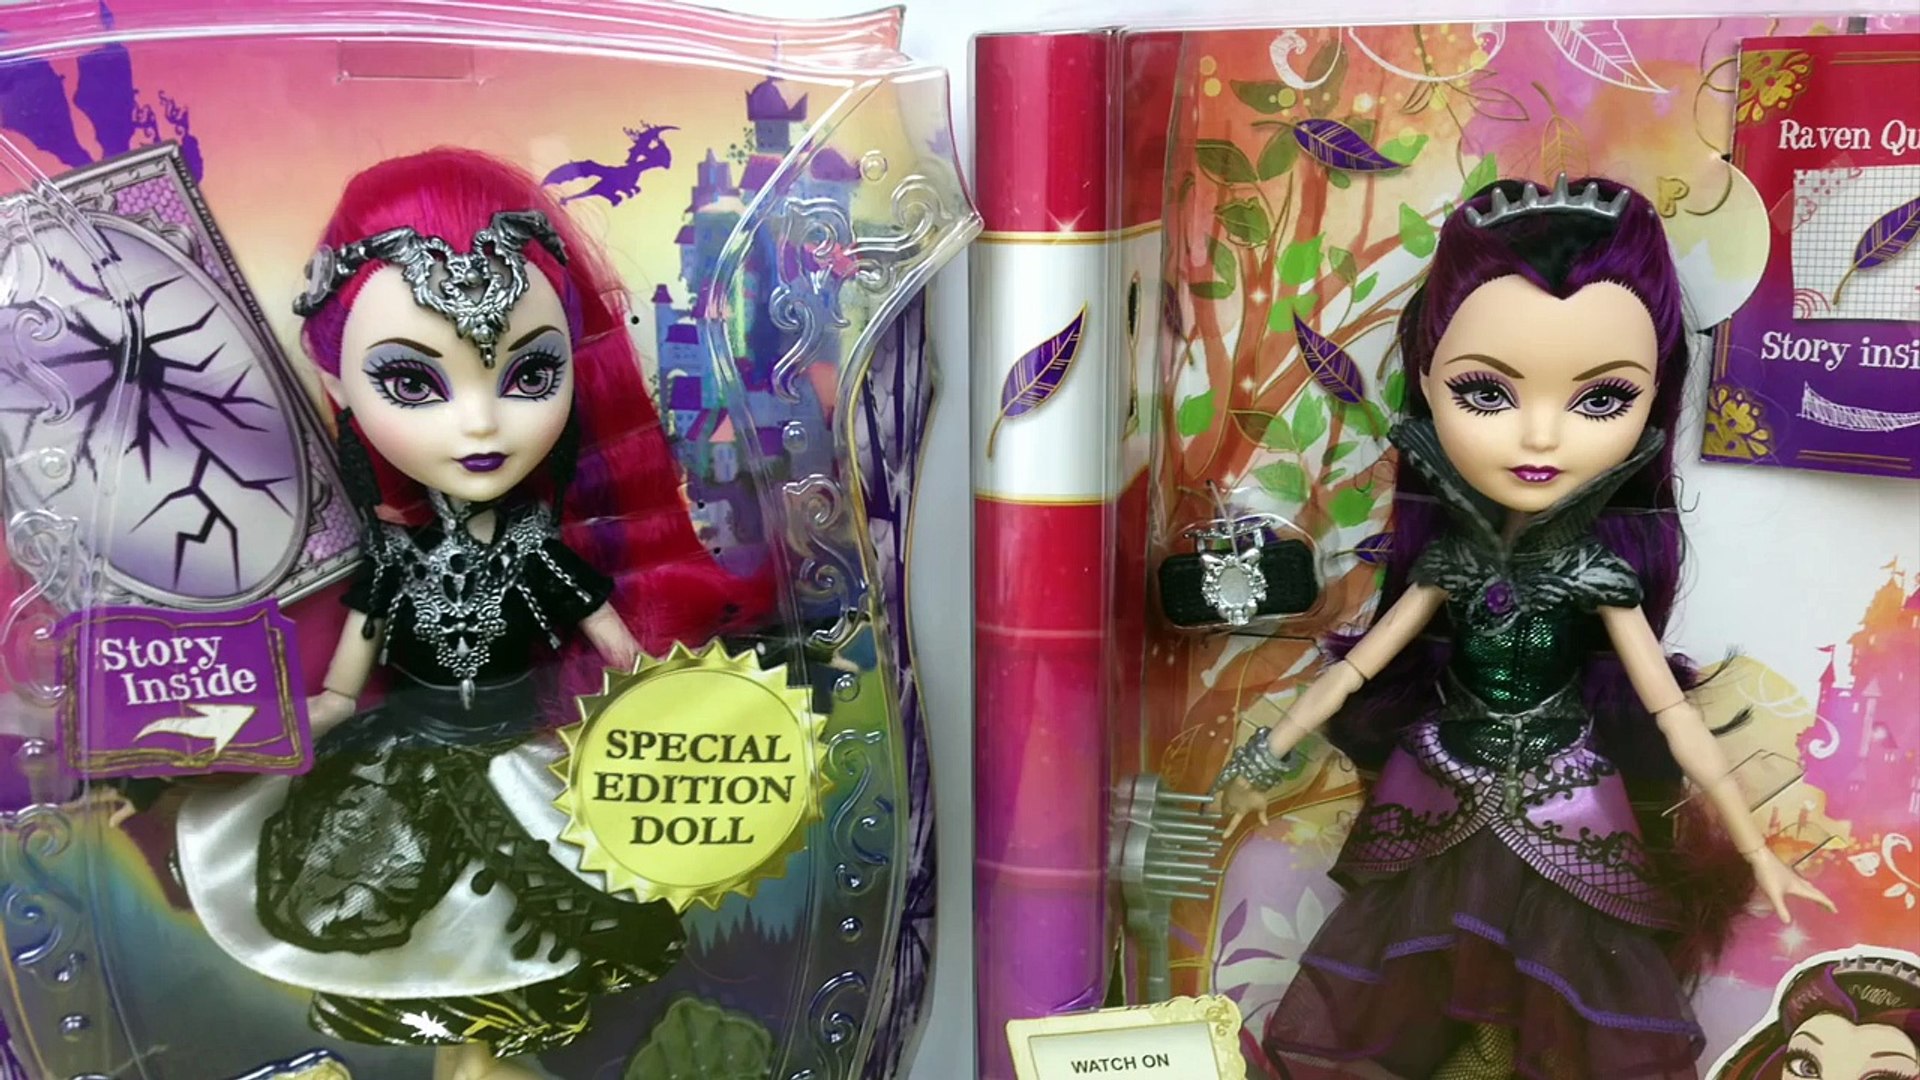 My toys,loves and fashions: Ever After High - Boneca da Raven Queen!!!   Куклы, Мультфильмы, Поделки своими руками